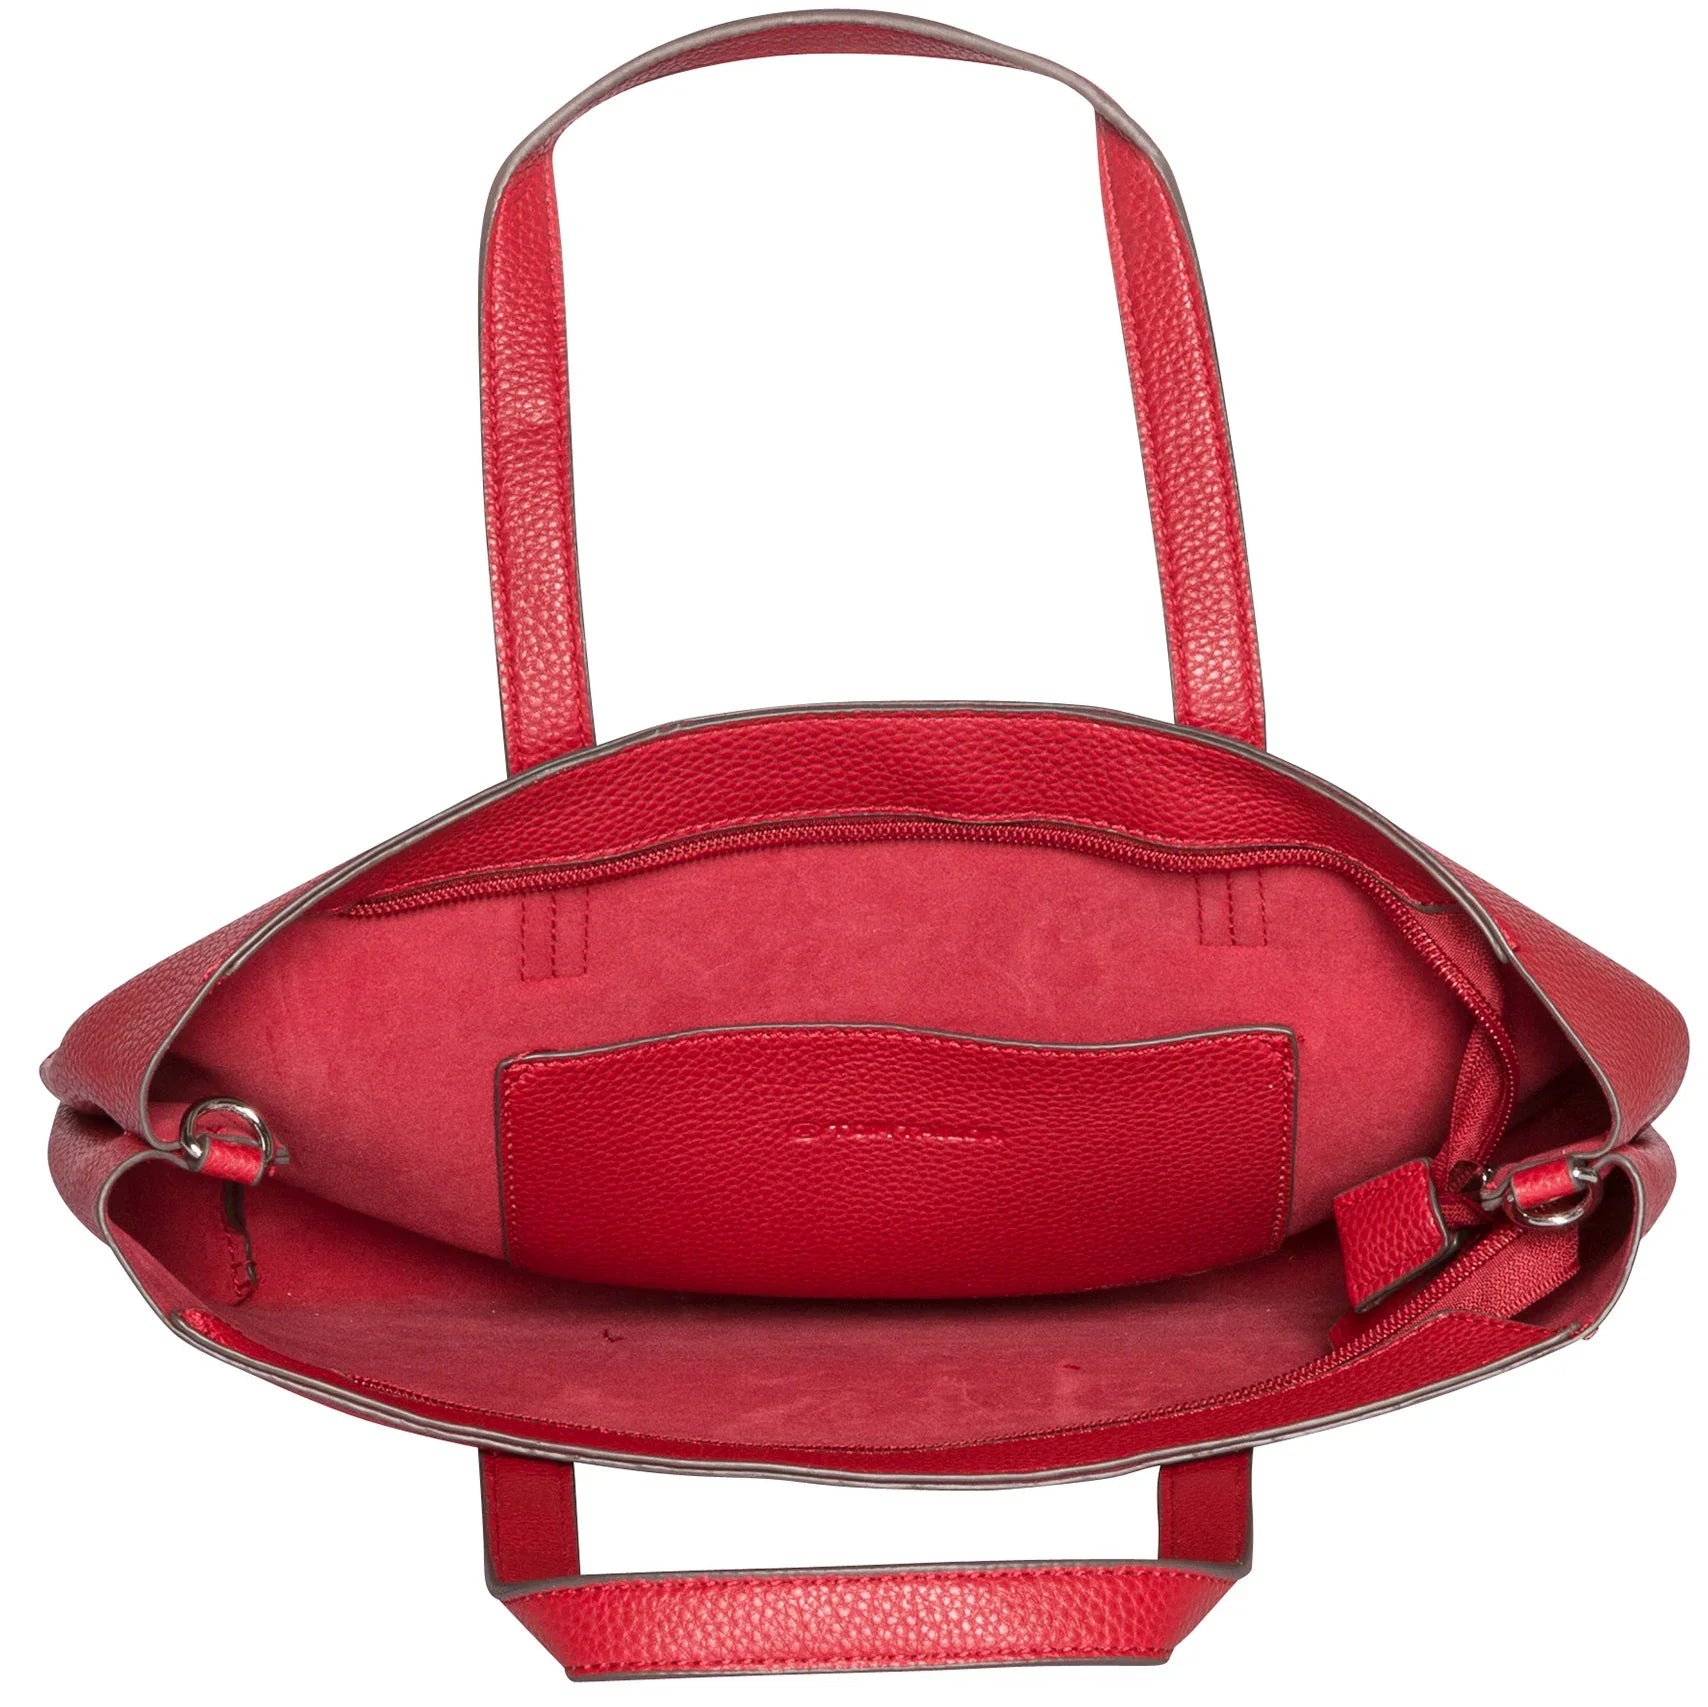 Tom Tailor Bags Marla Zip Shopper 34 cm - red